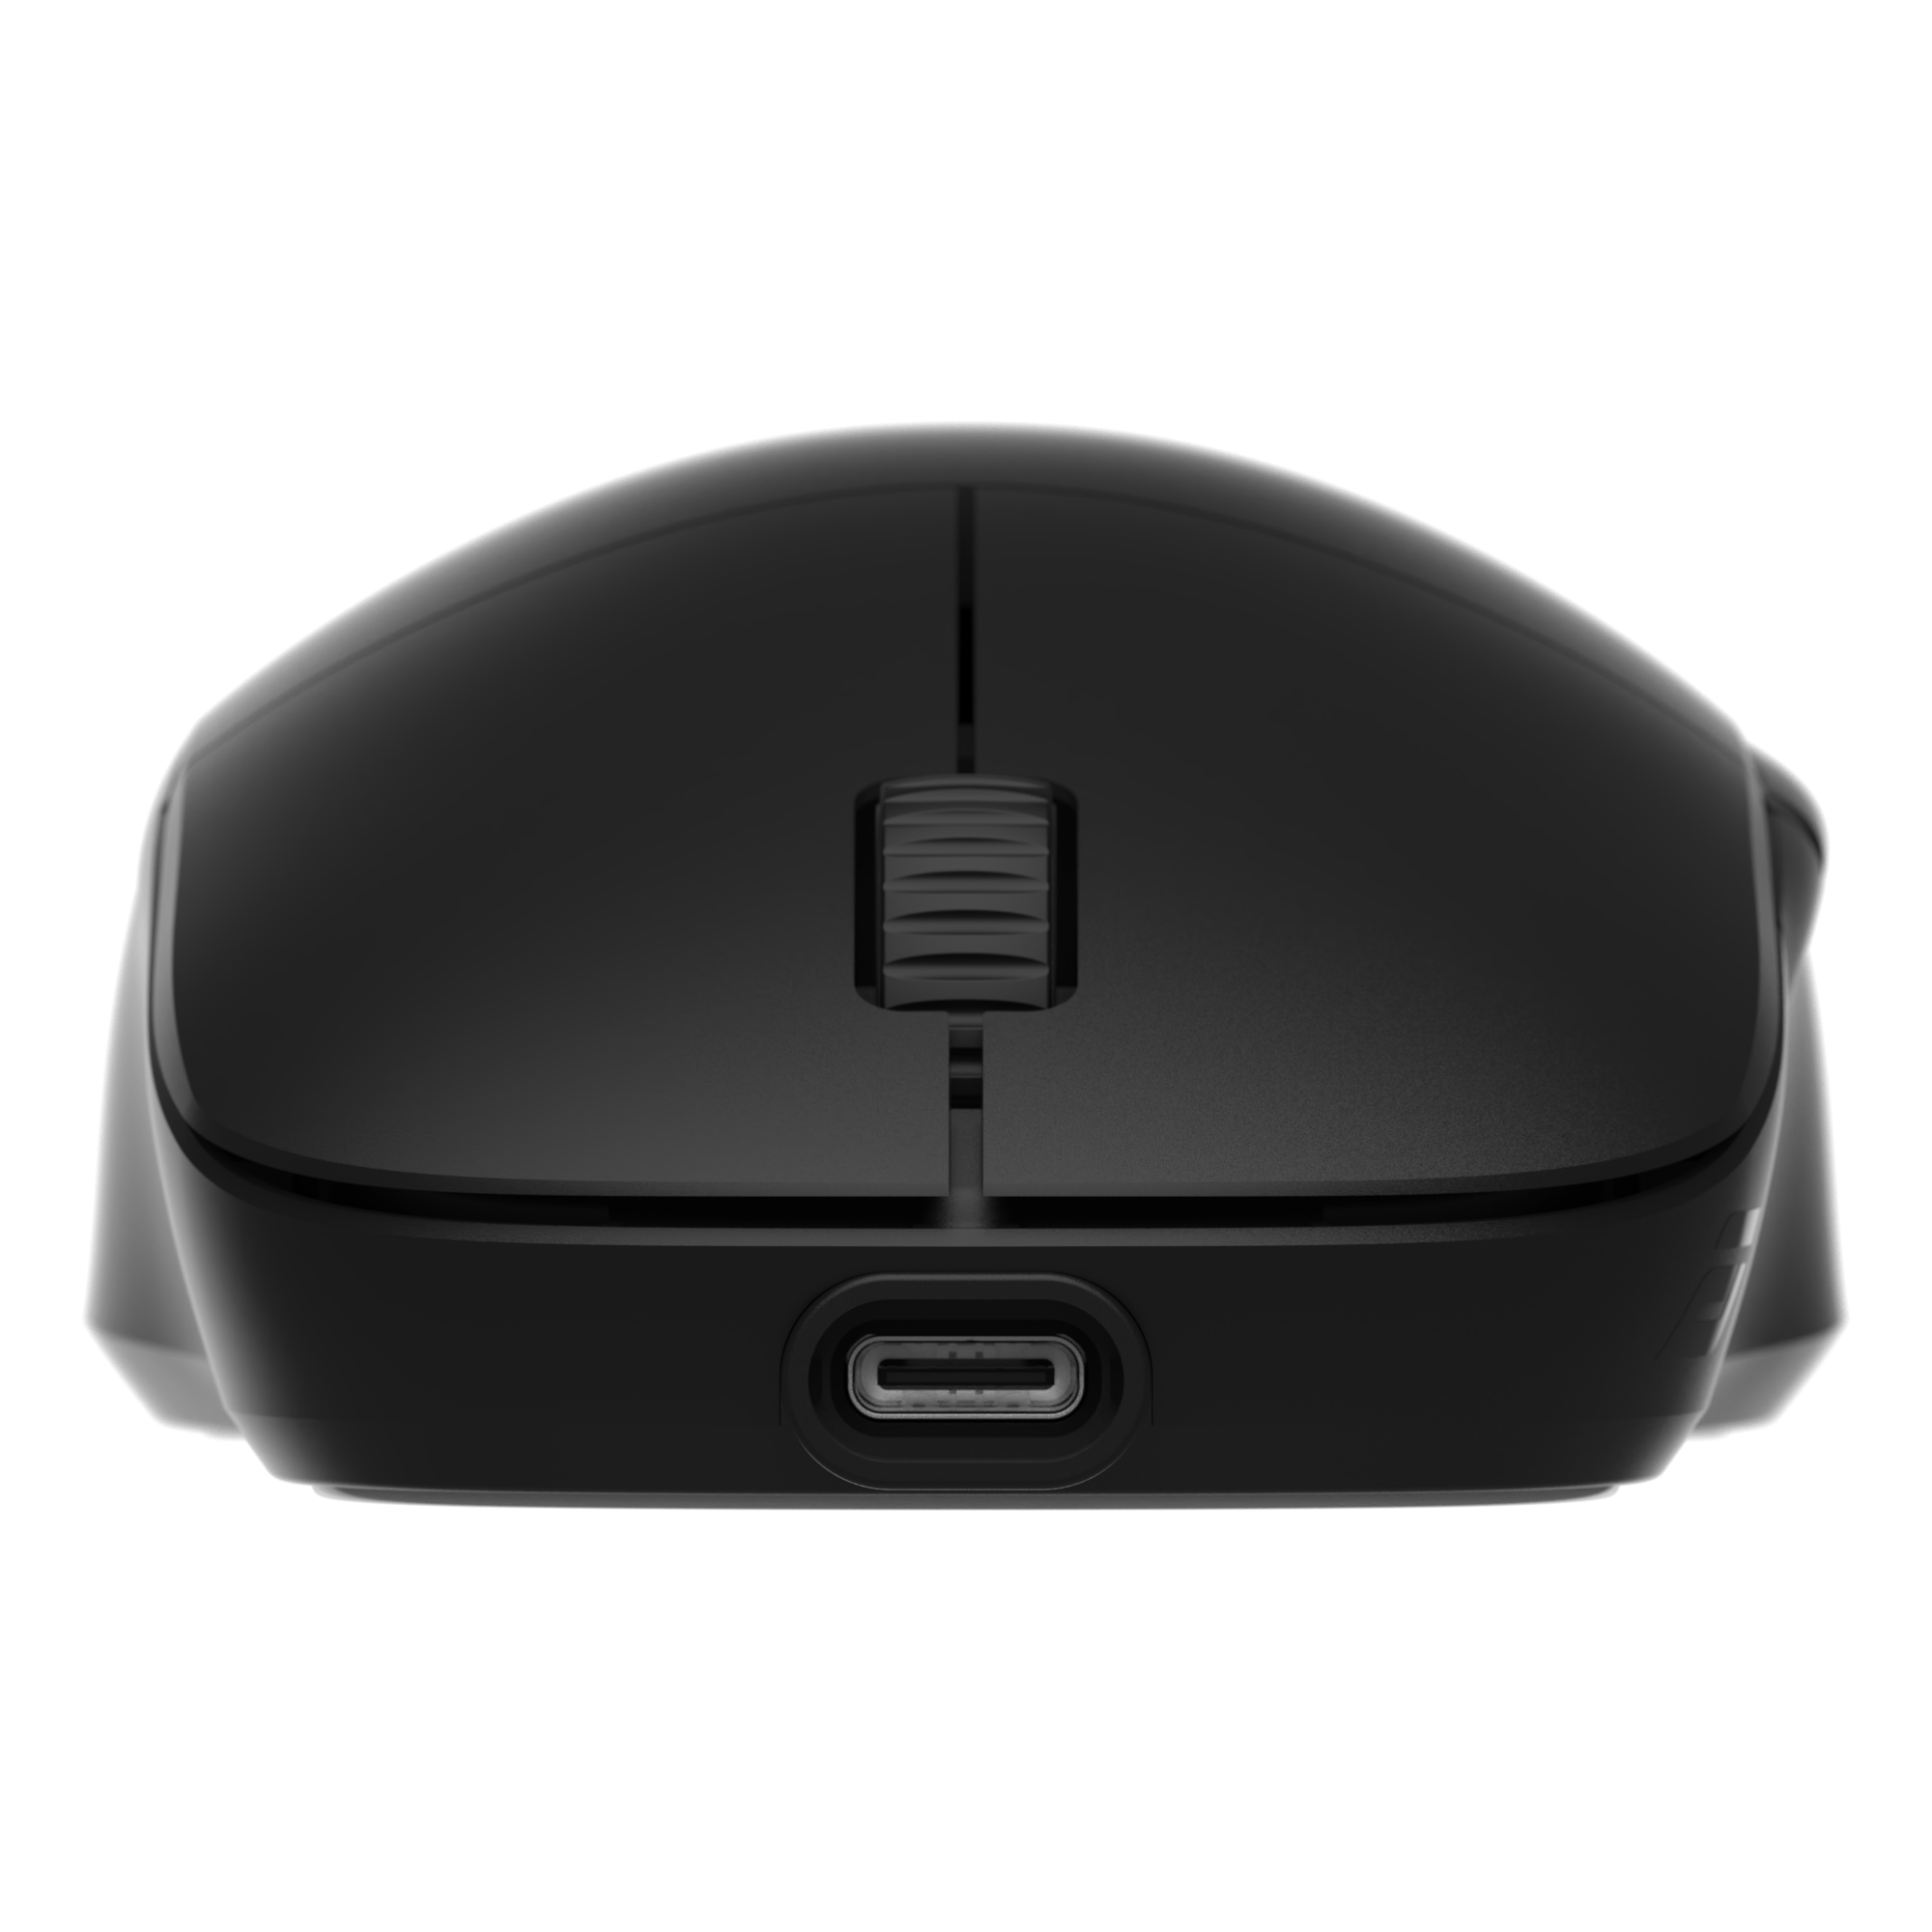 endgame-gear - XM2w Wireless Gaming Mouse - Black